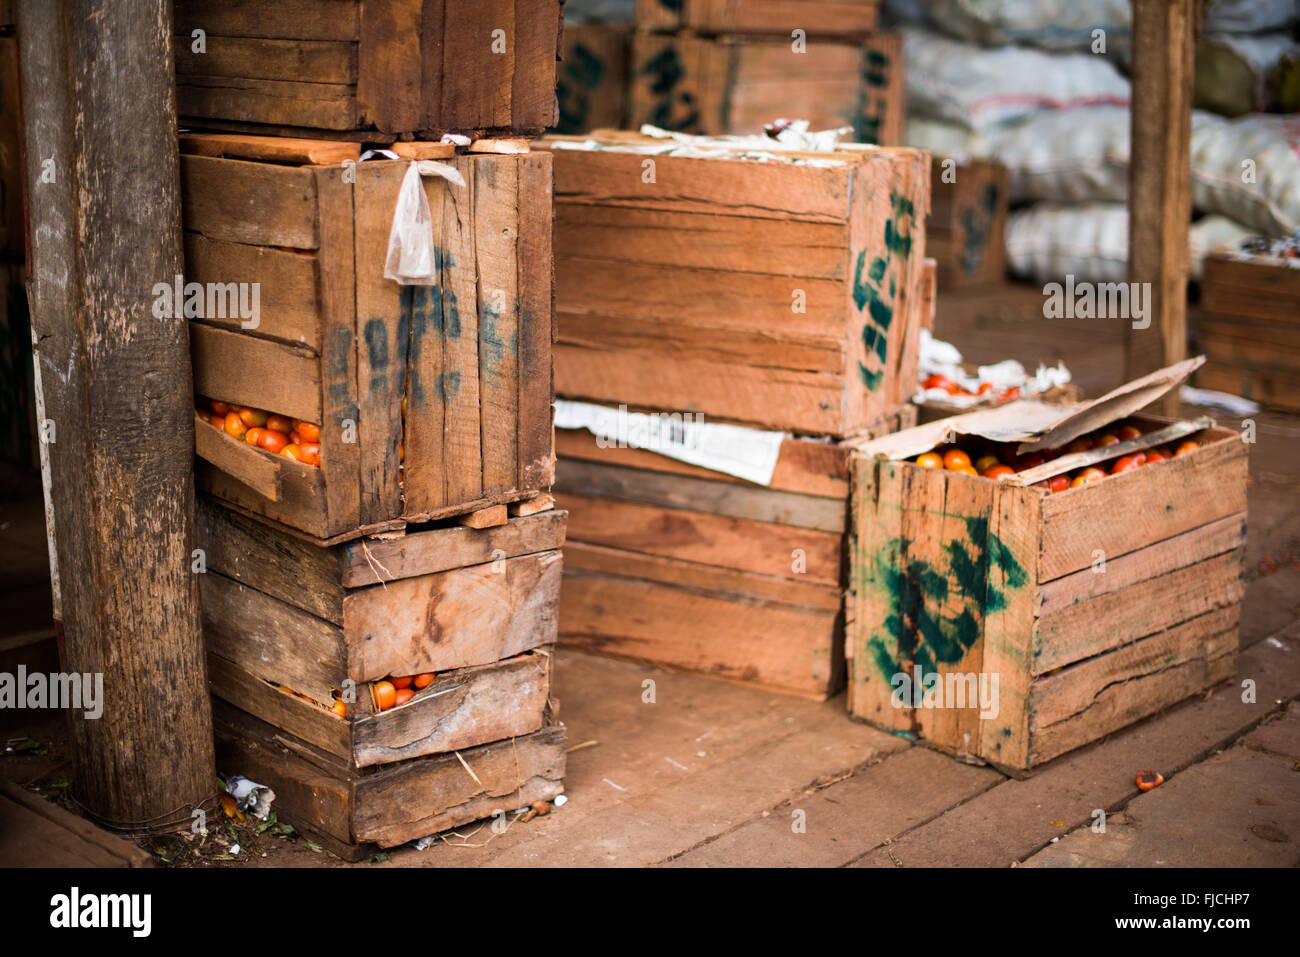 MANDALAY, Myanmar - Crates of tomatoes at the fish and flower market in Mandalay, Myanmar (Burma). Stock Photo